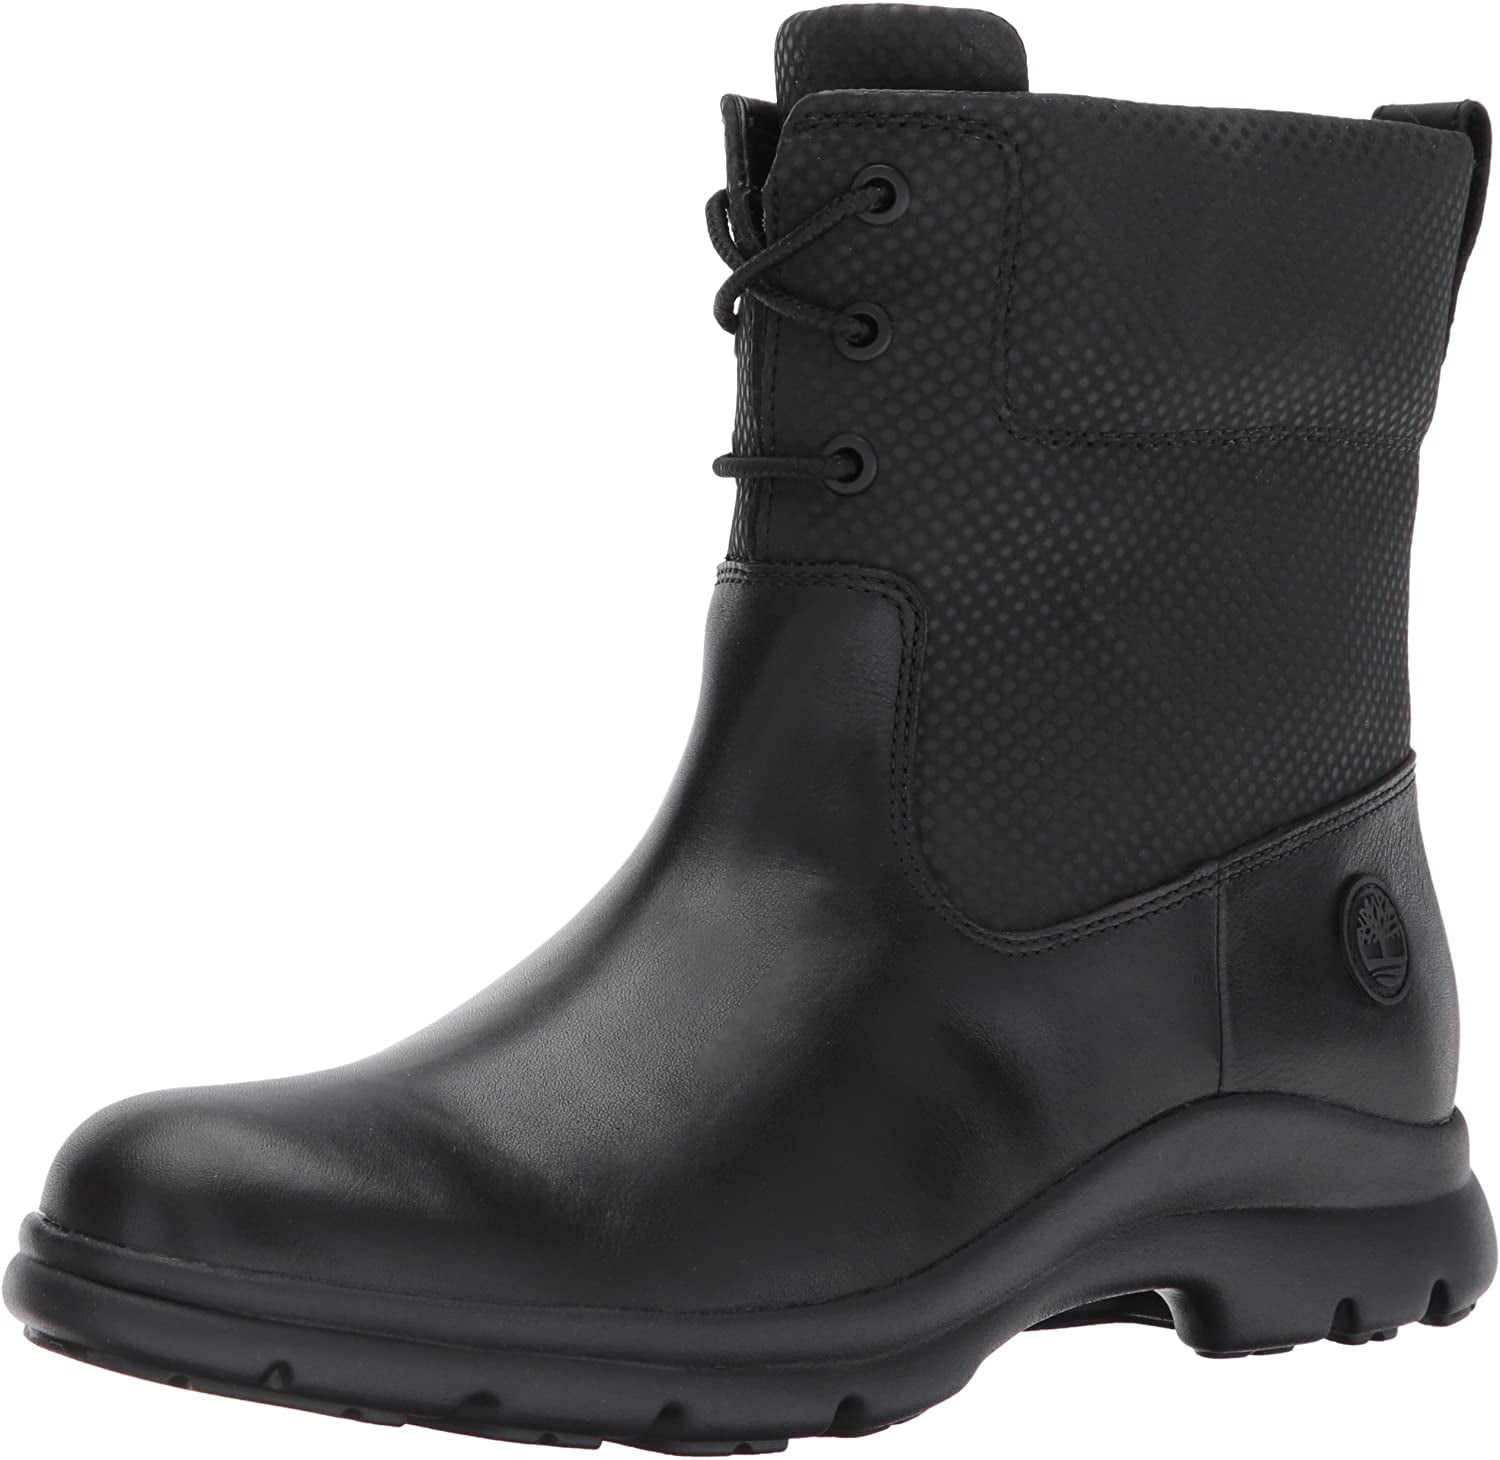 Turain Ankle Wp Rain Boot, Black, 8 C 